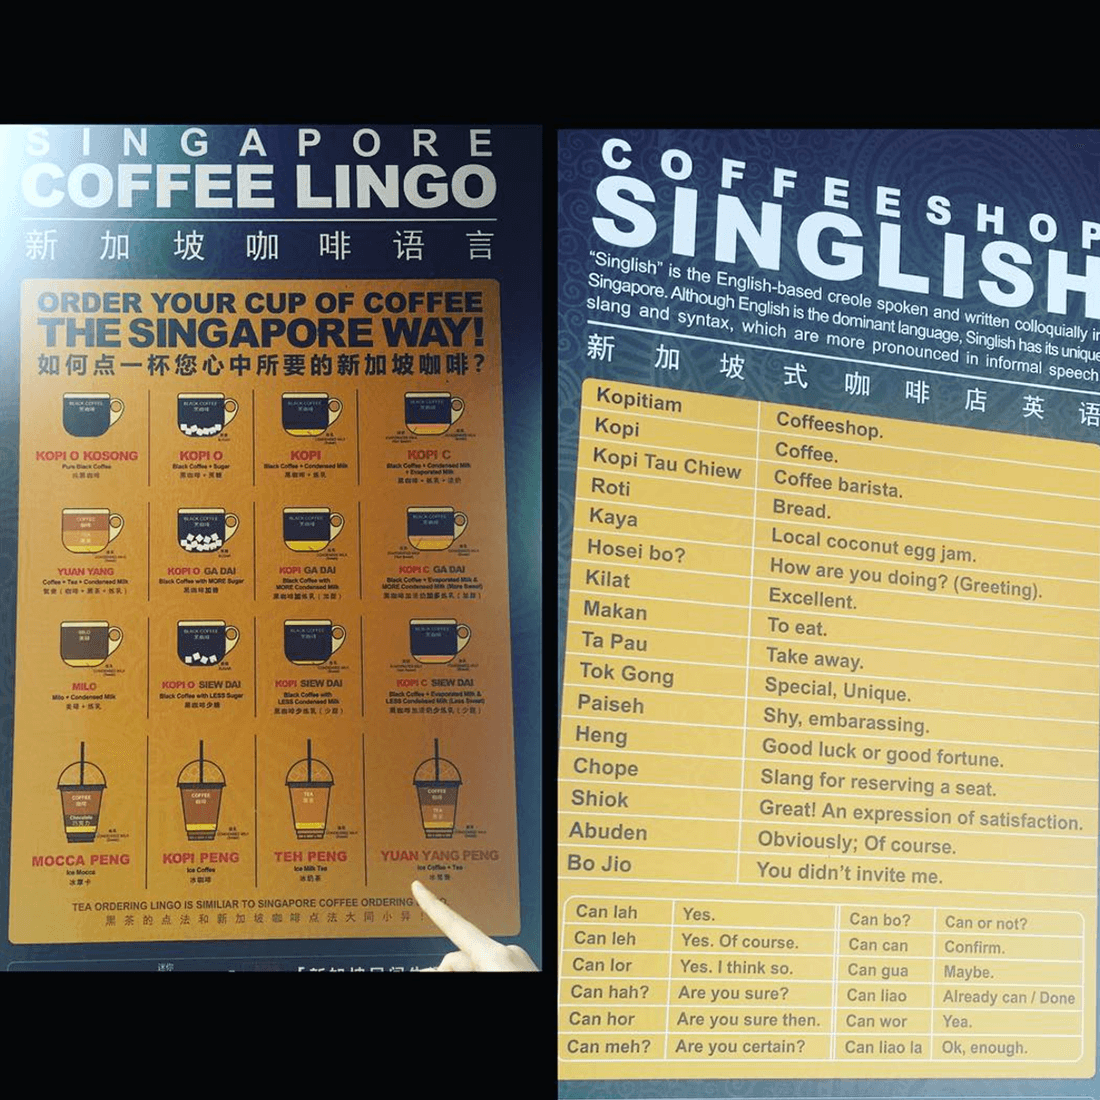 Singapore Coffee Lingo (Source: Nichaal Kaur/Instagram)